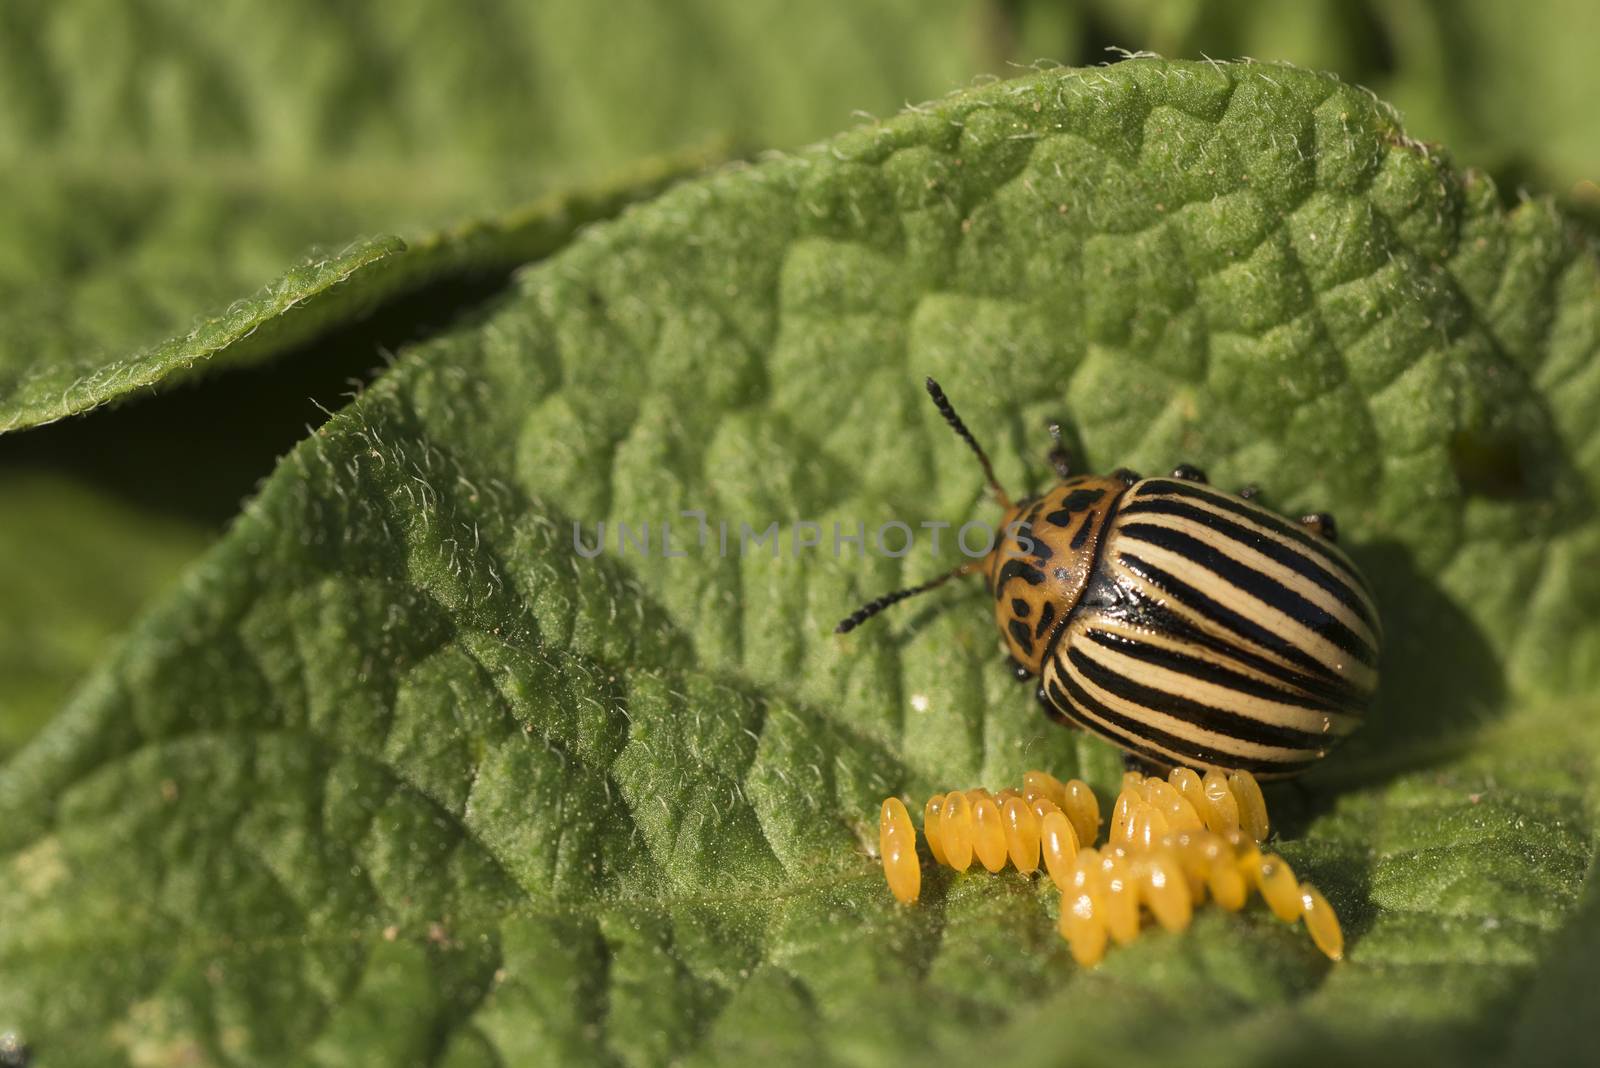 Eggs and Colorado potato beetle eats potato leaves, Leptinotarsa decemlineata